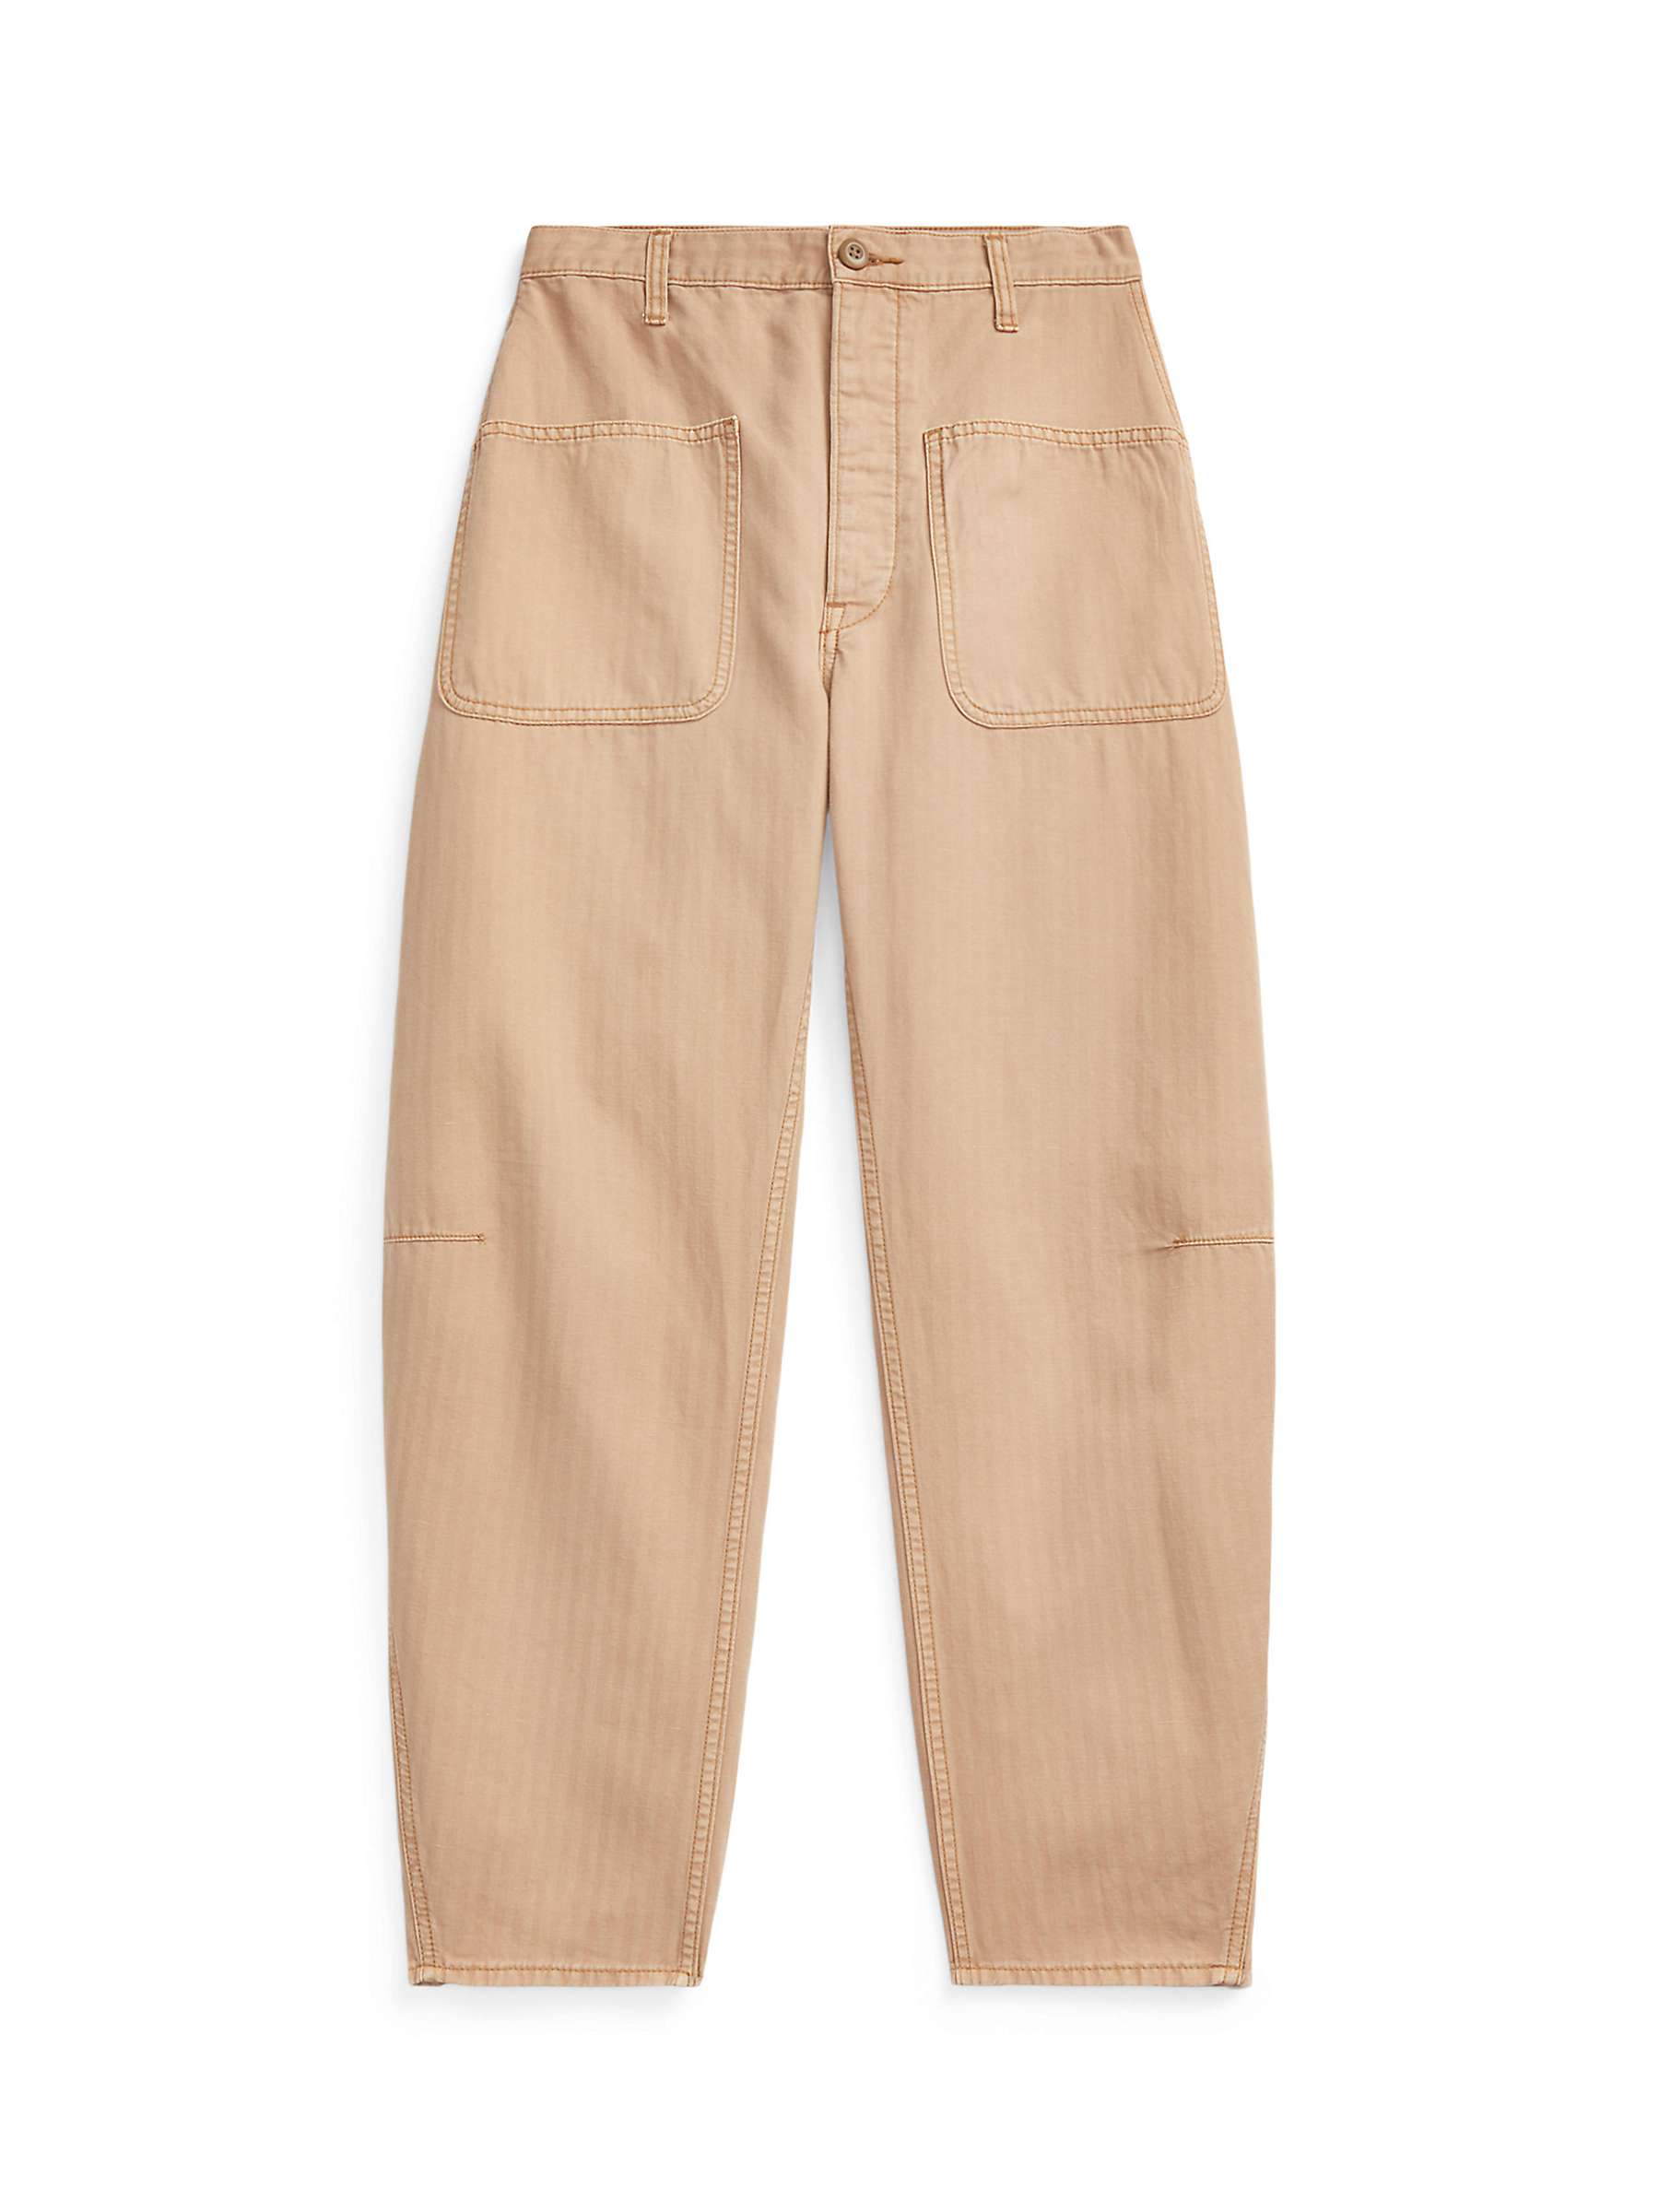 Buy Polo Ralph Lauren Relaxed Carrot Cotton Linen Blend Trousers, Khaki Online at johnlewis.com